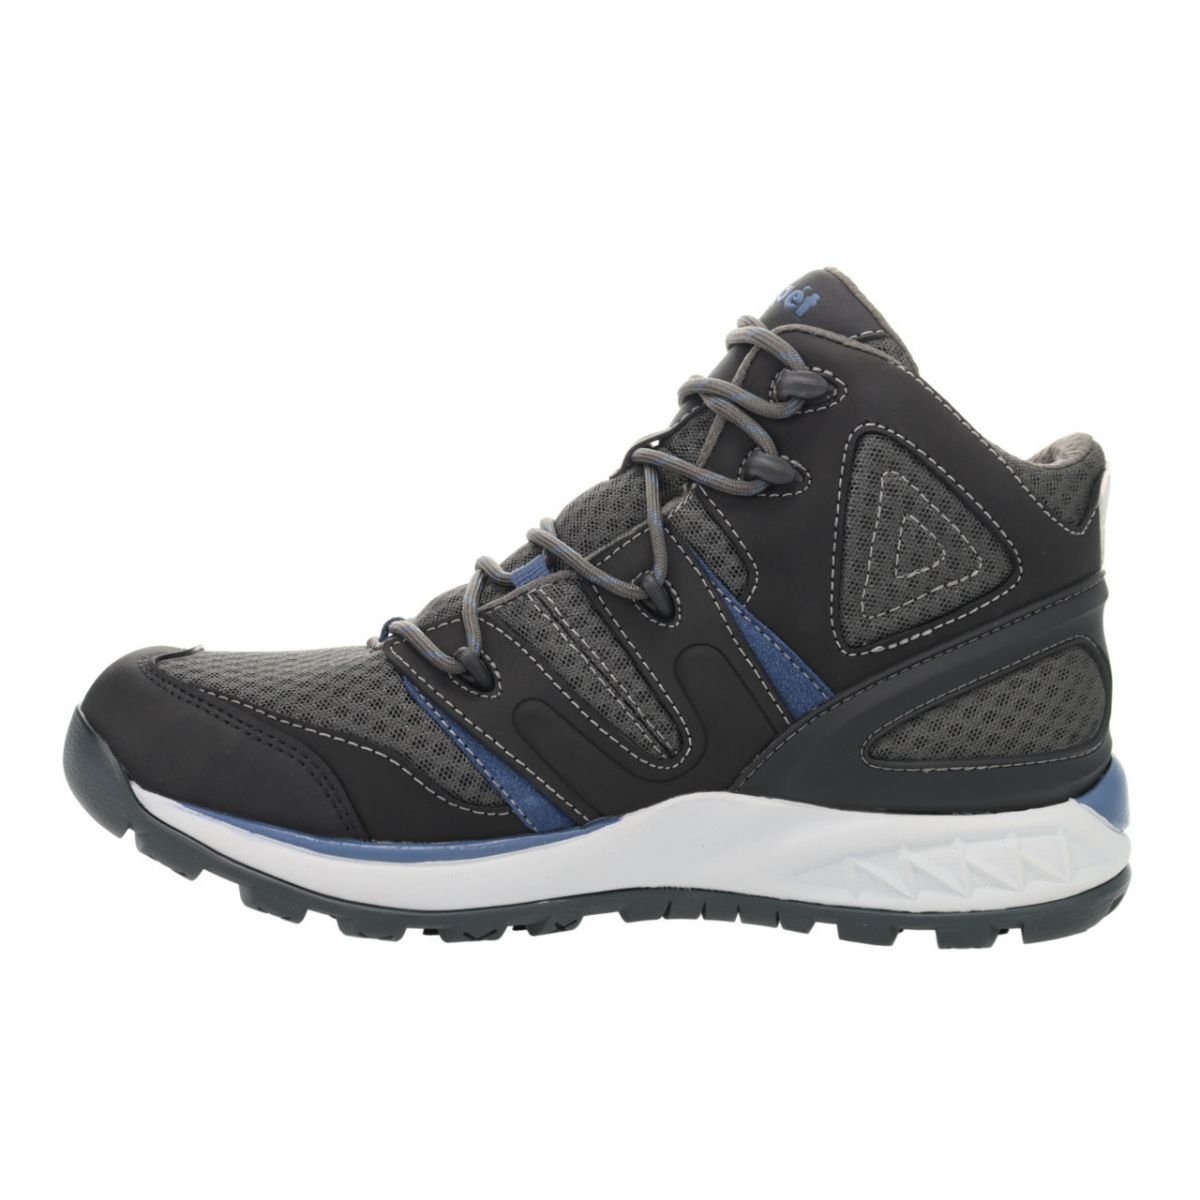 Propet Men's Veymont Waterproof Hiking Boot Grey/Blue - MOA022SGRB GREY/BLUE - GREY/BLUE, 9.5